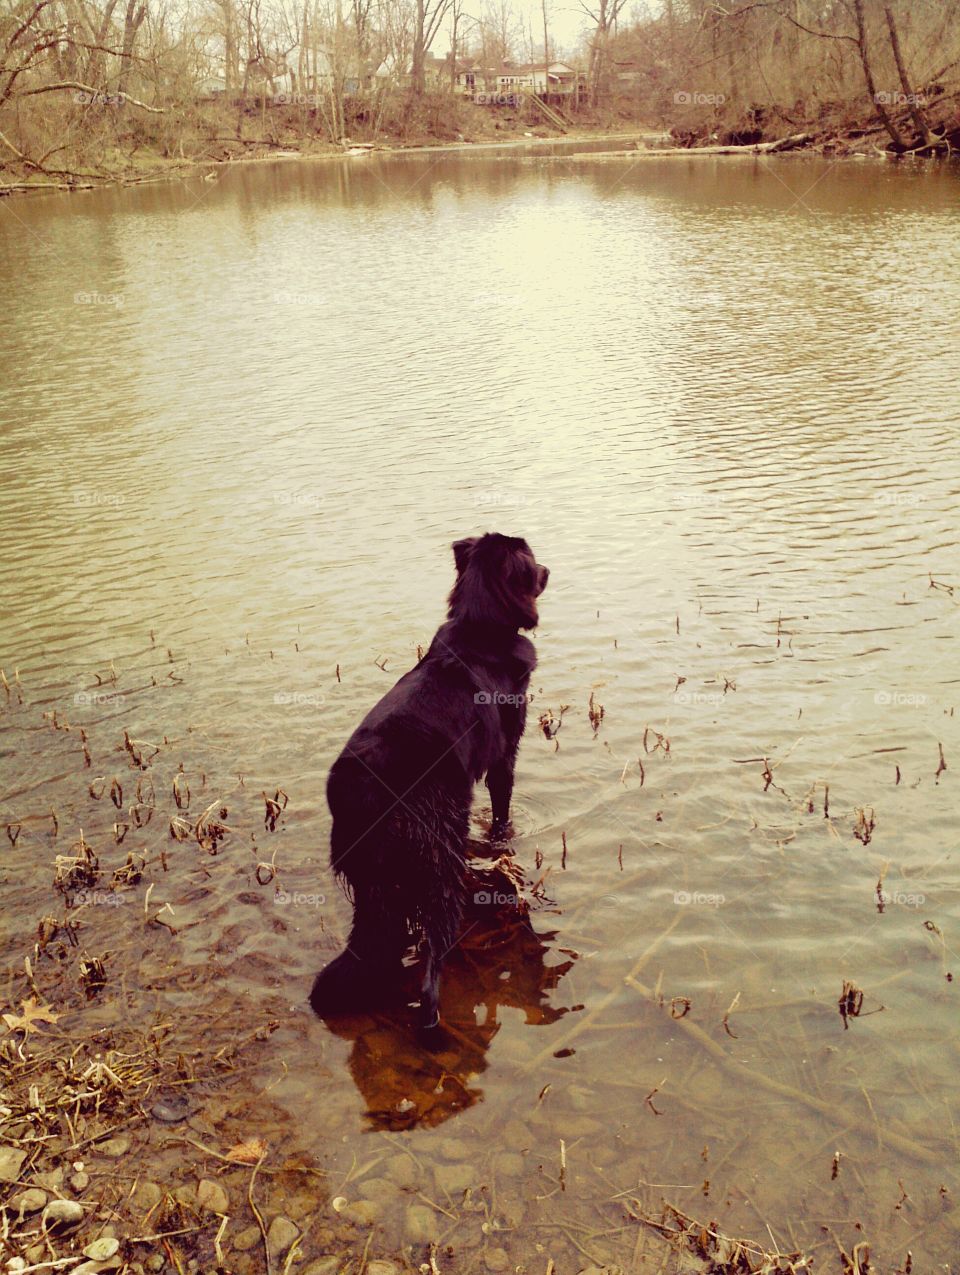 Water dog